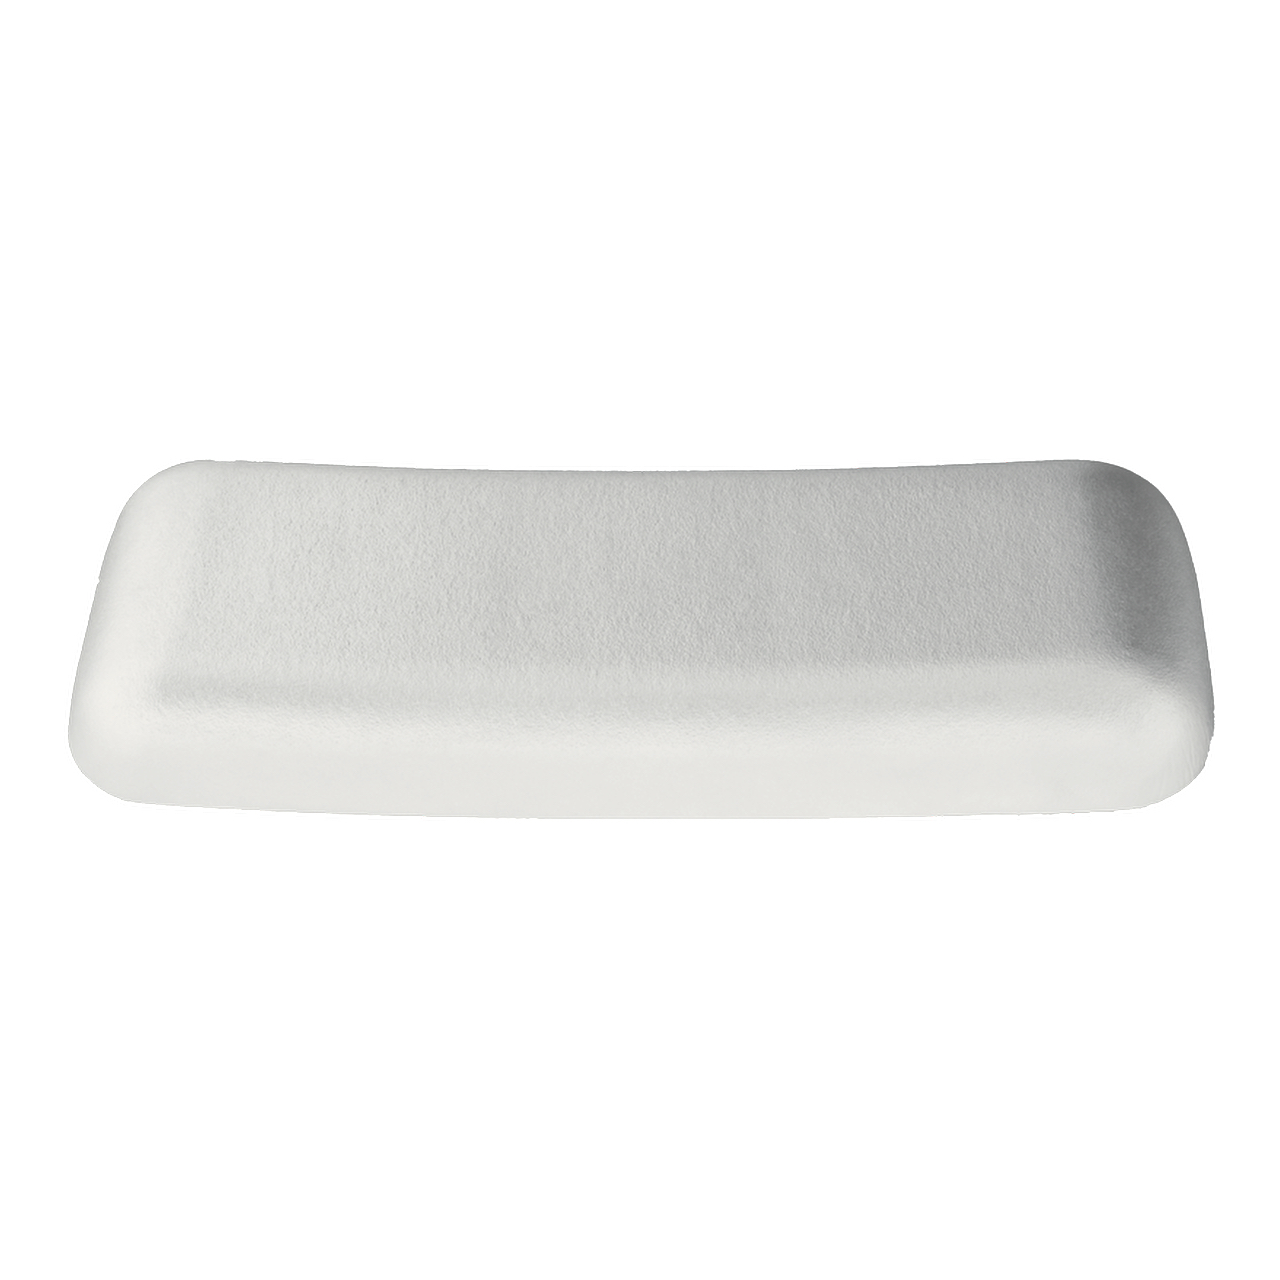 Relax weiß, 1 Stück, Ausstattung / Oberfläche, Badewanne, 330x115x45 mm